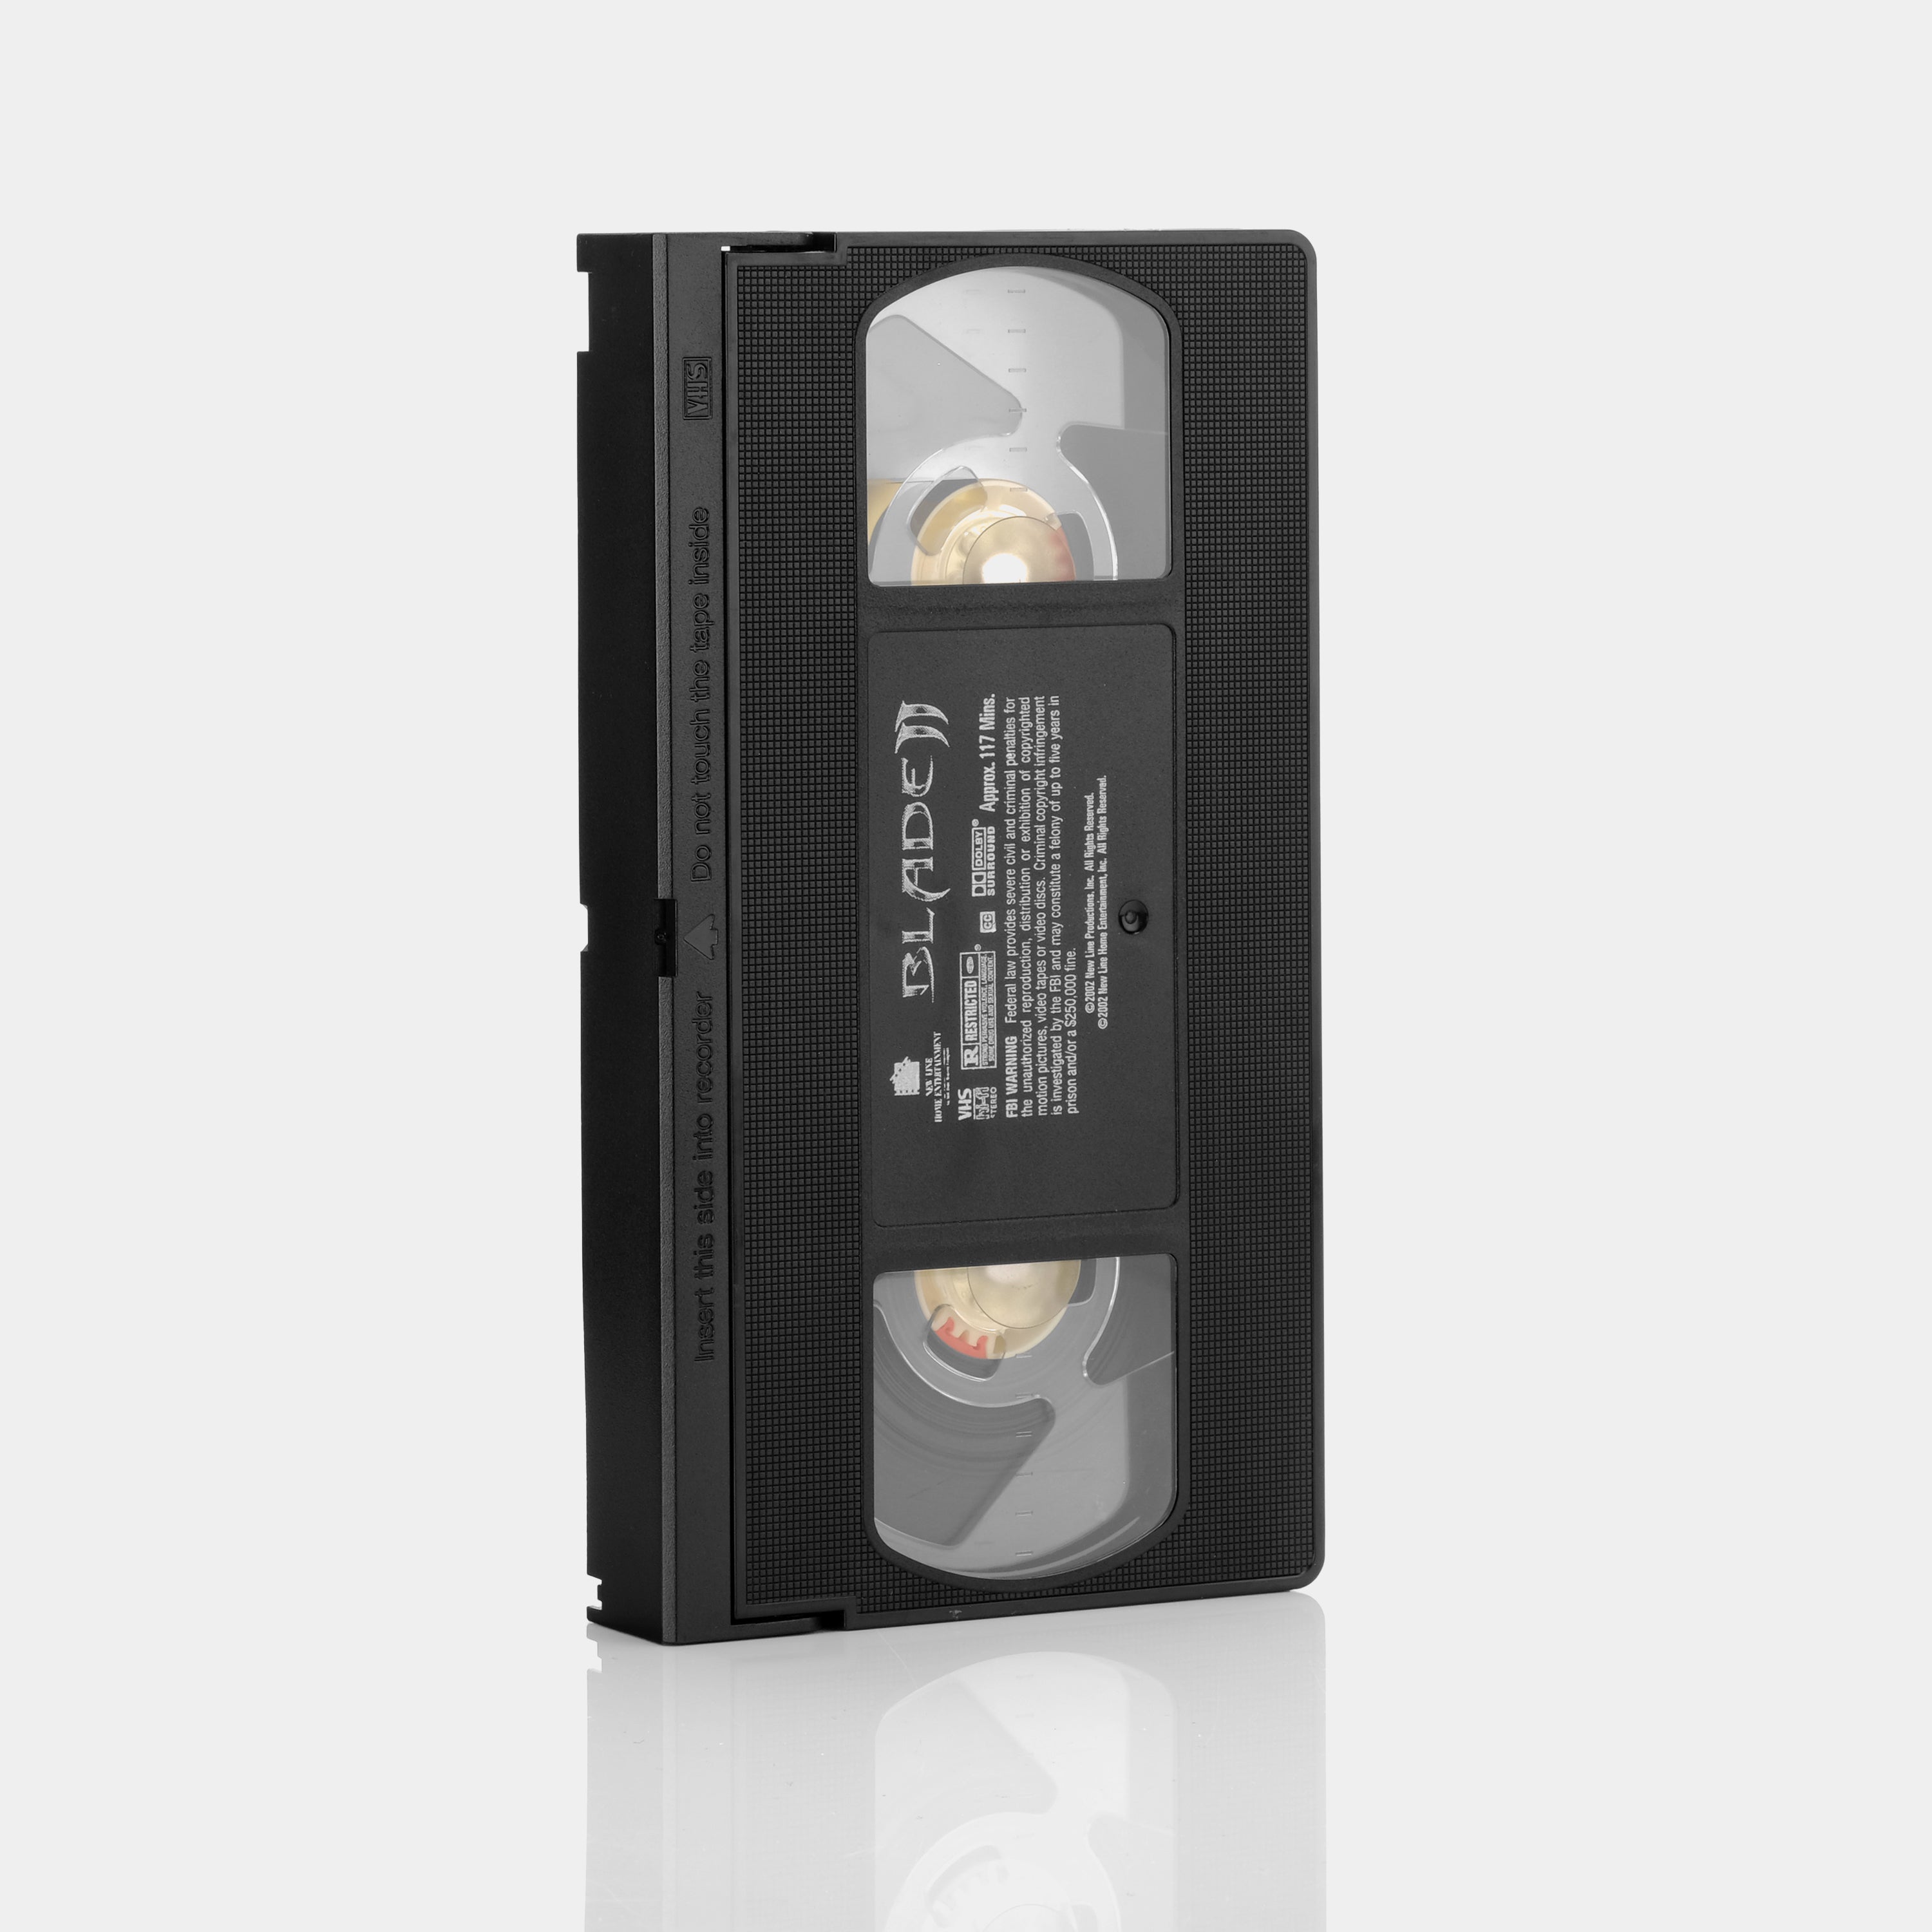 Blade II VHS Tape